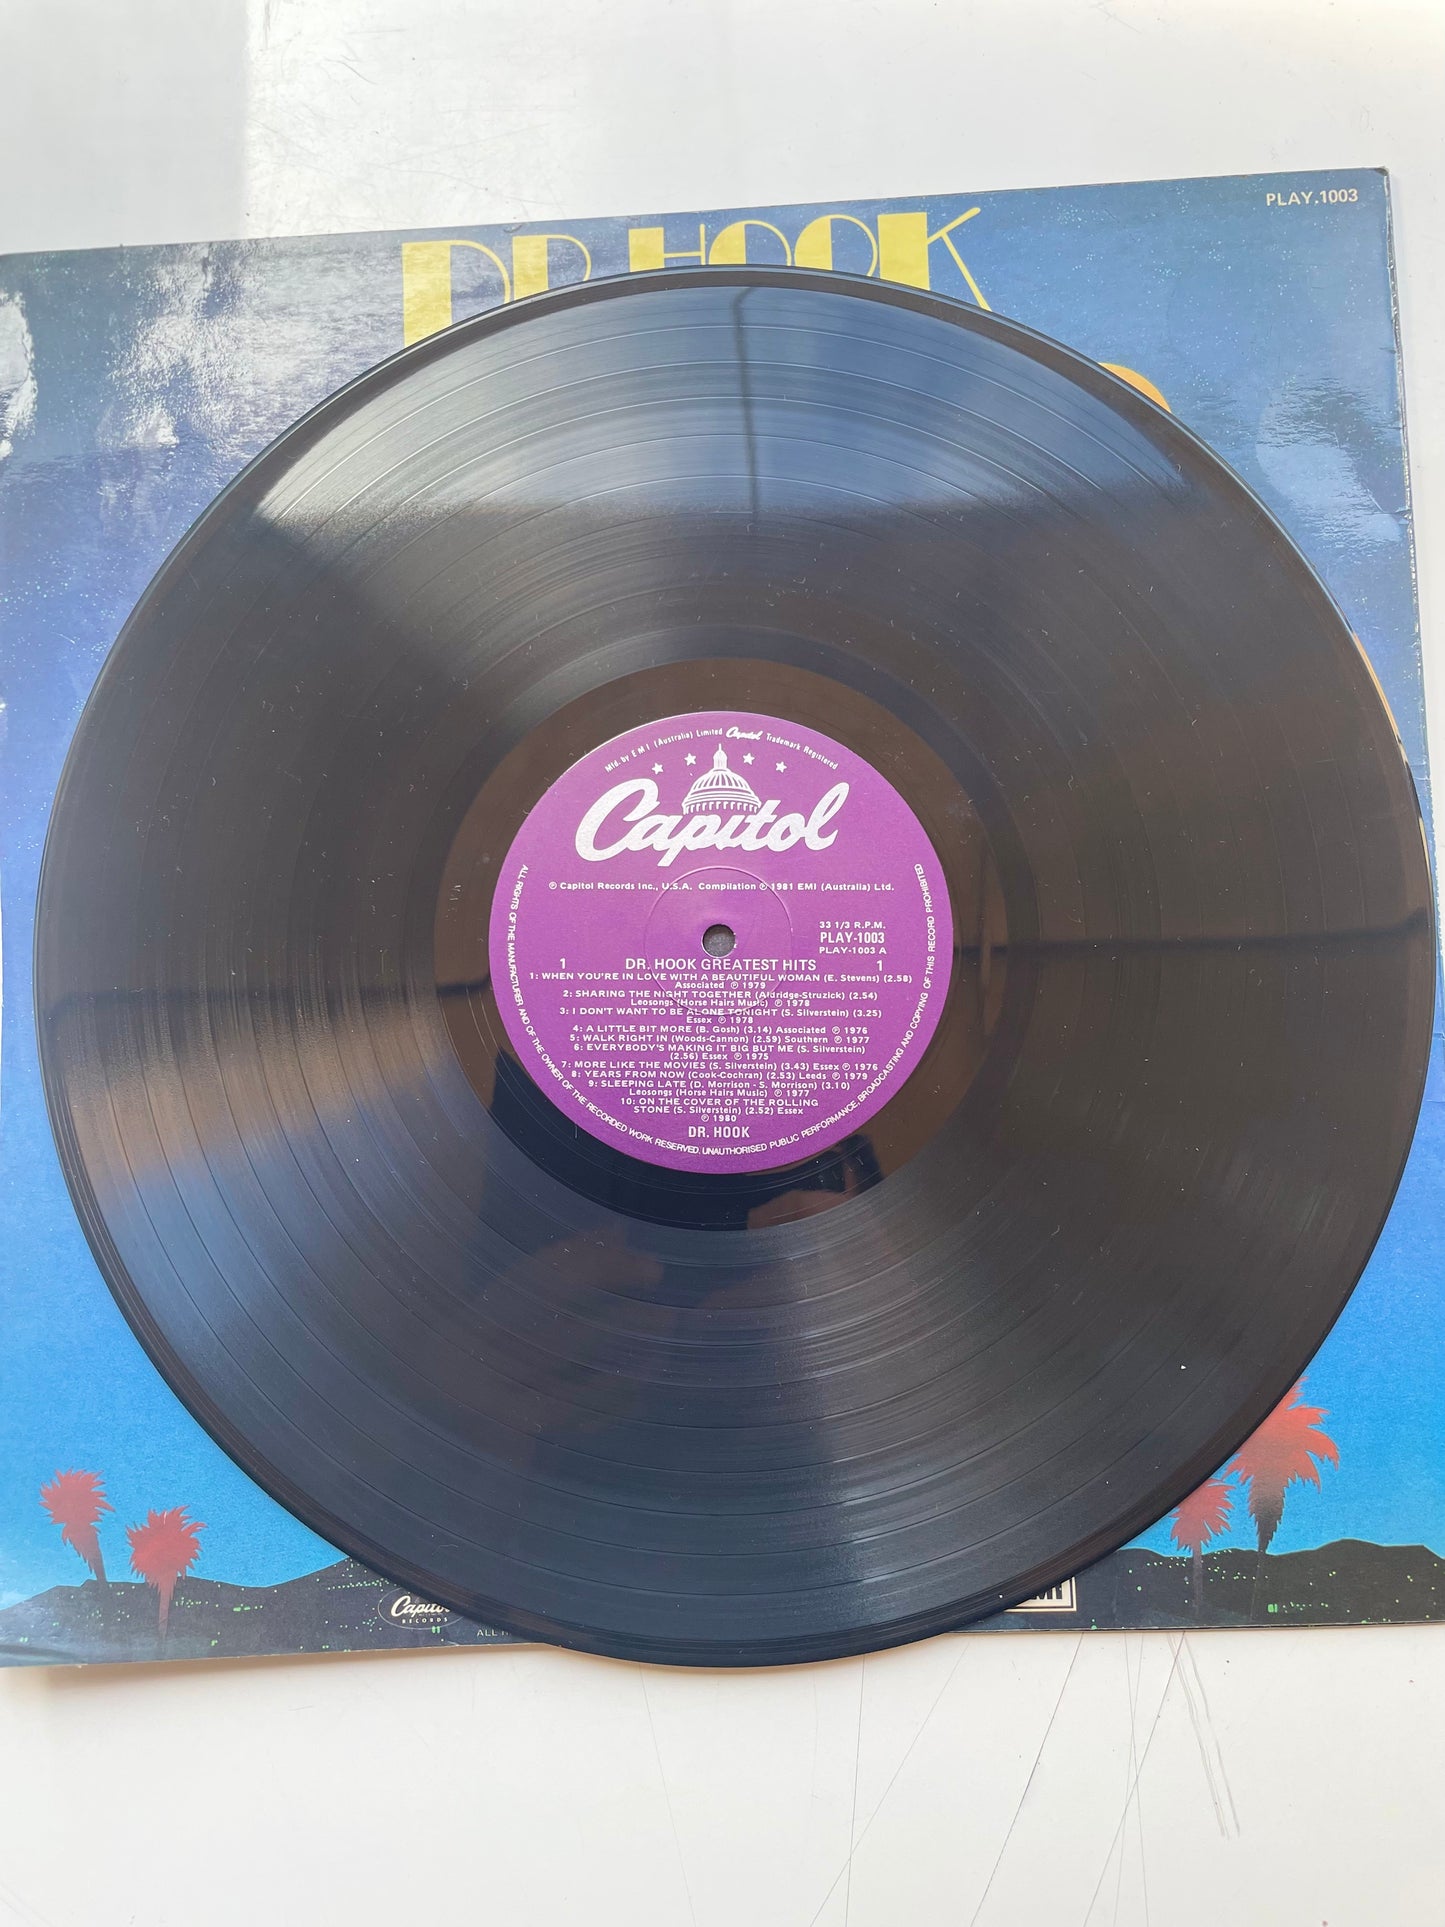 Vinyl Record LP Dr Hooks Greatest Hits Original 1981